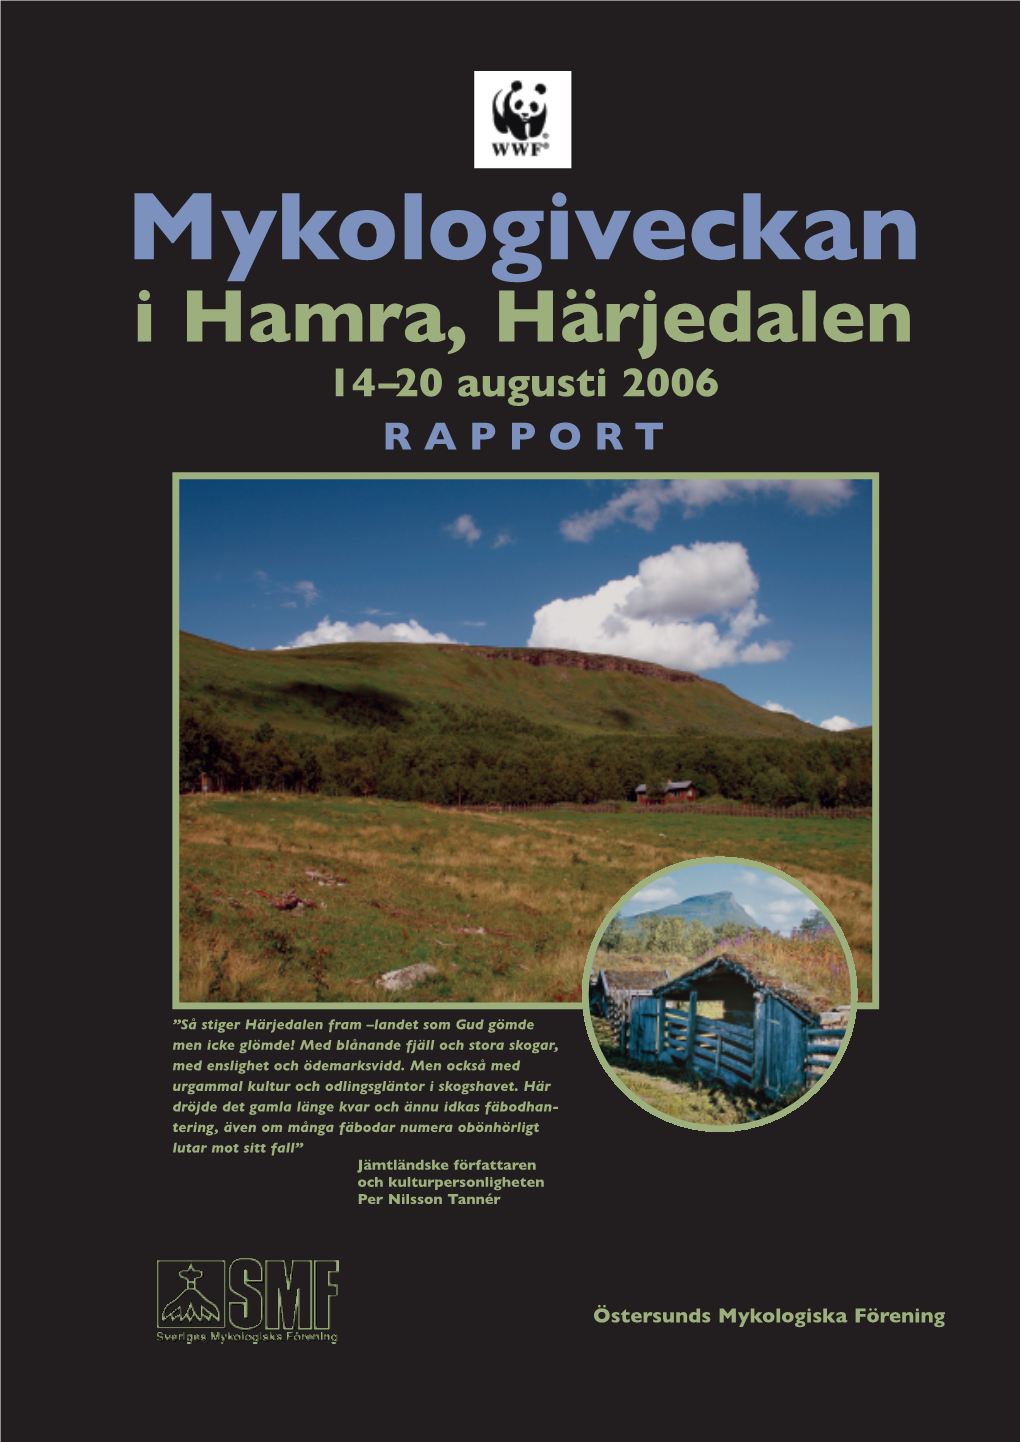 2006 Mykologiveckan Härjedalen Rapport